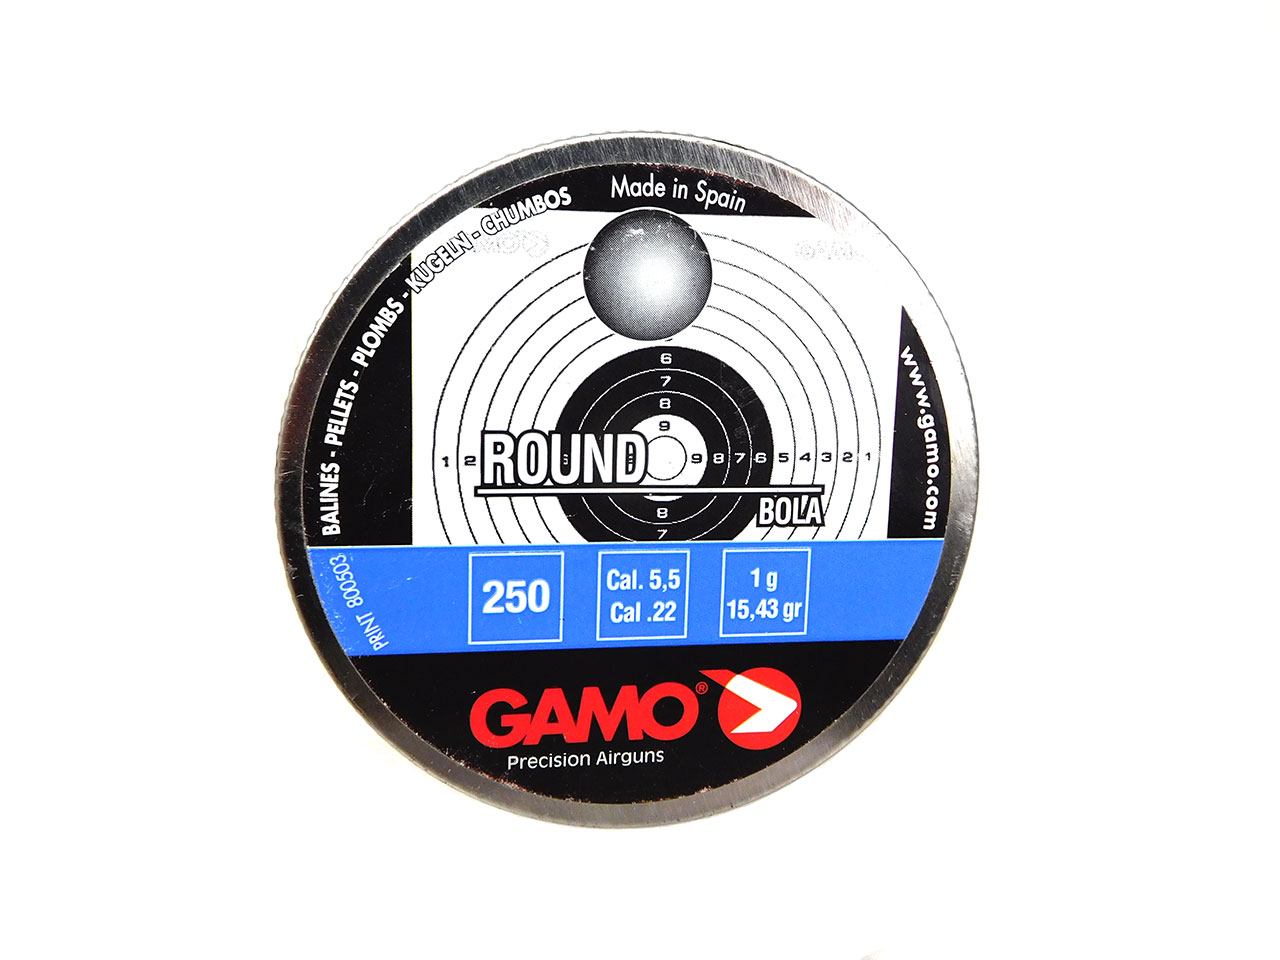 Gamo .22 Round Ball Lead BBs BB's Pellet Alternative 15.43 gr 250 ct 